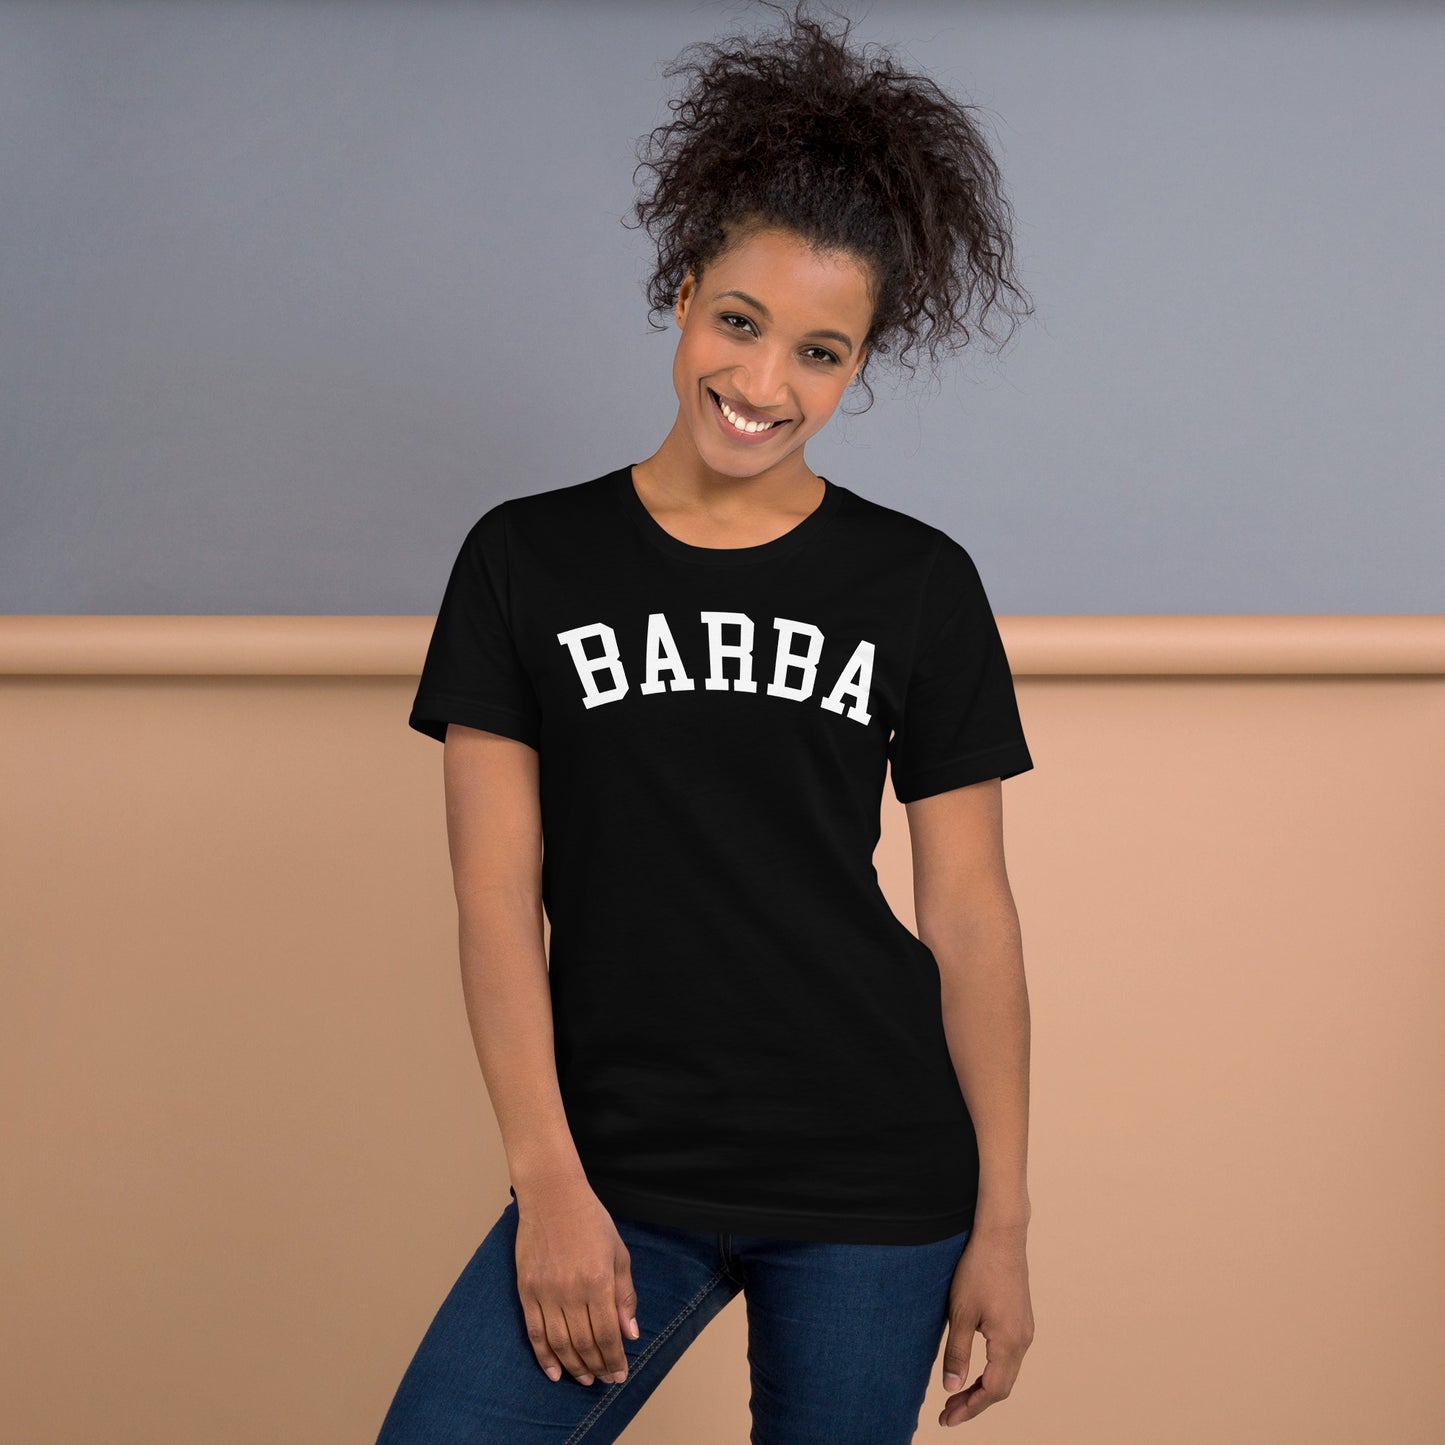 BARBA - Unisex t-shirt